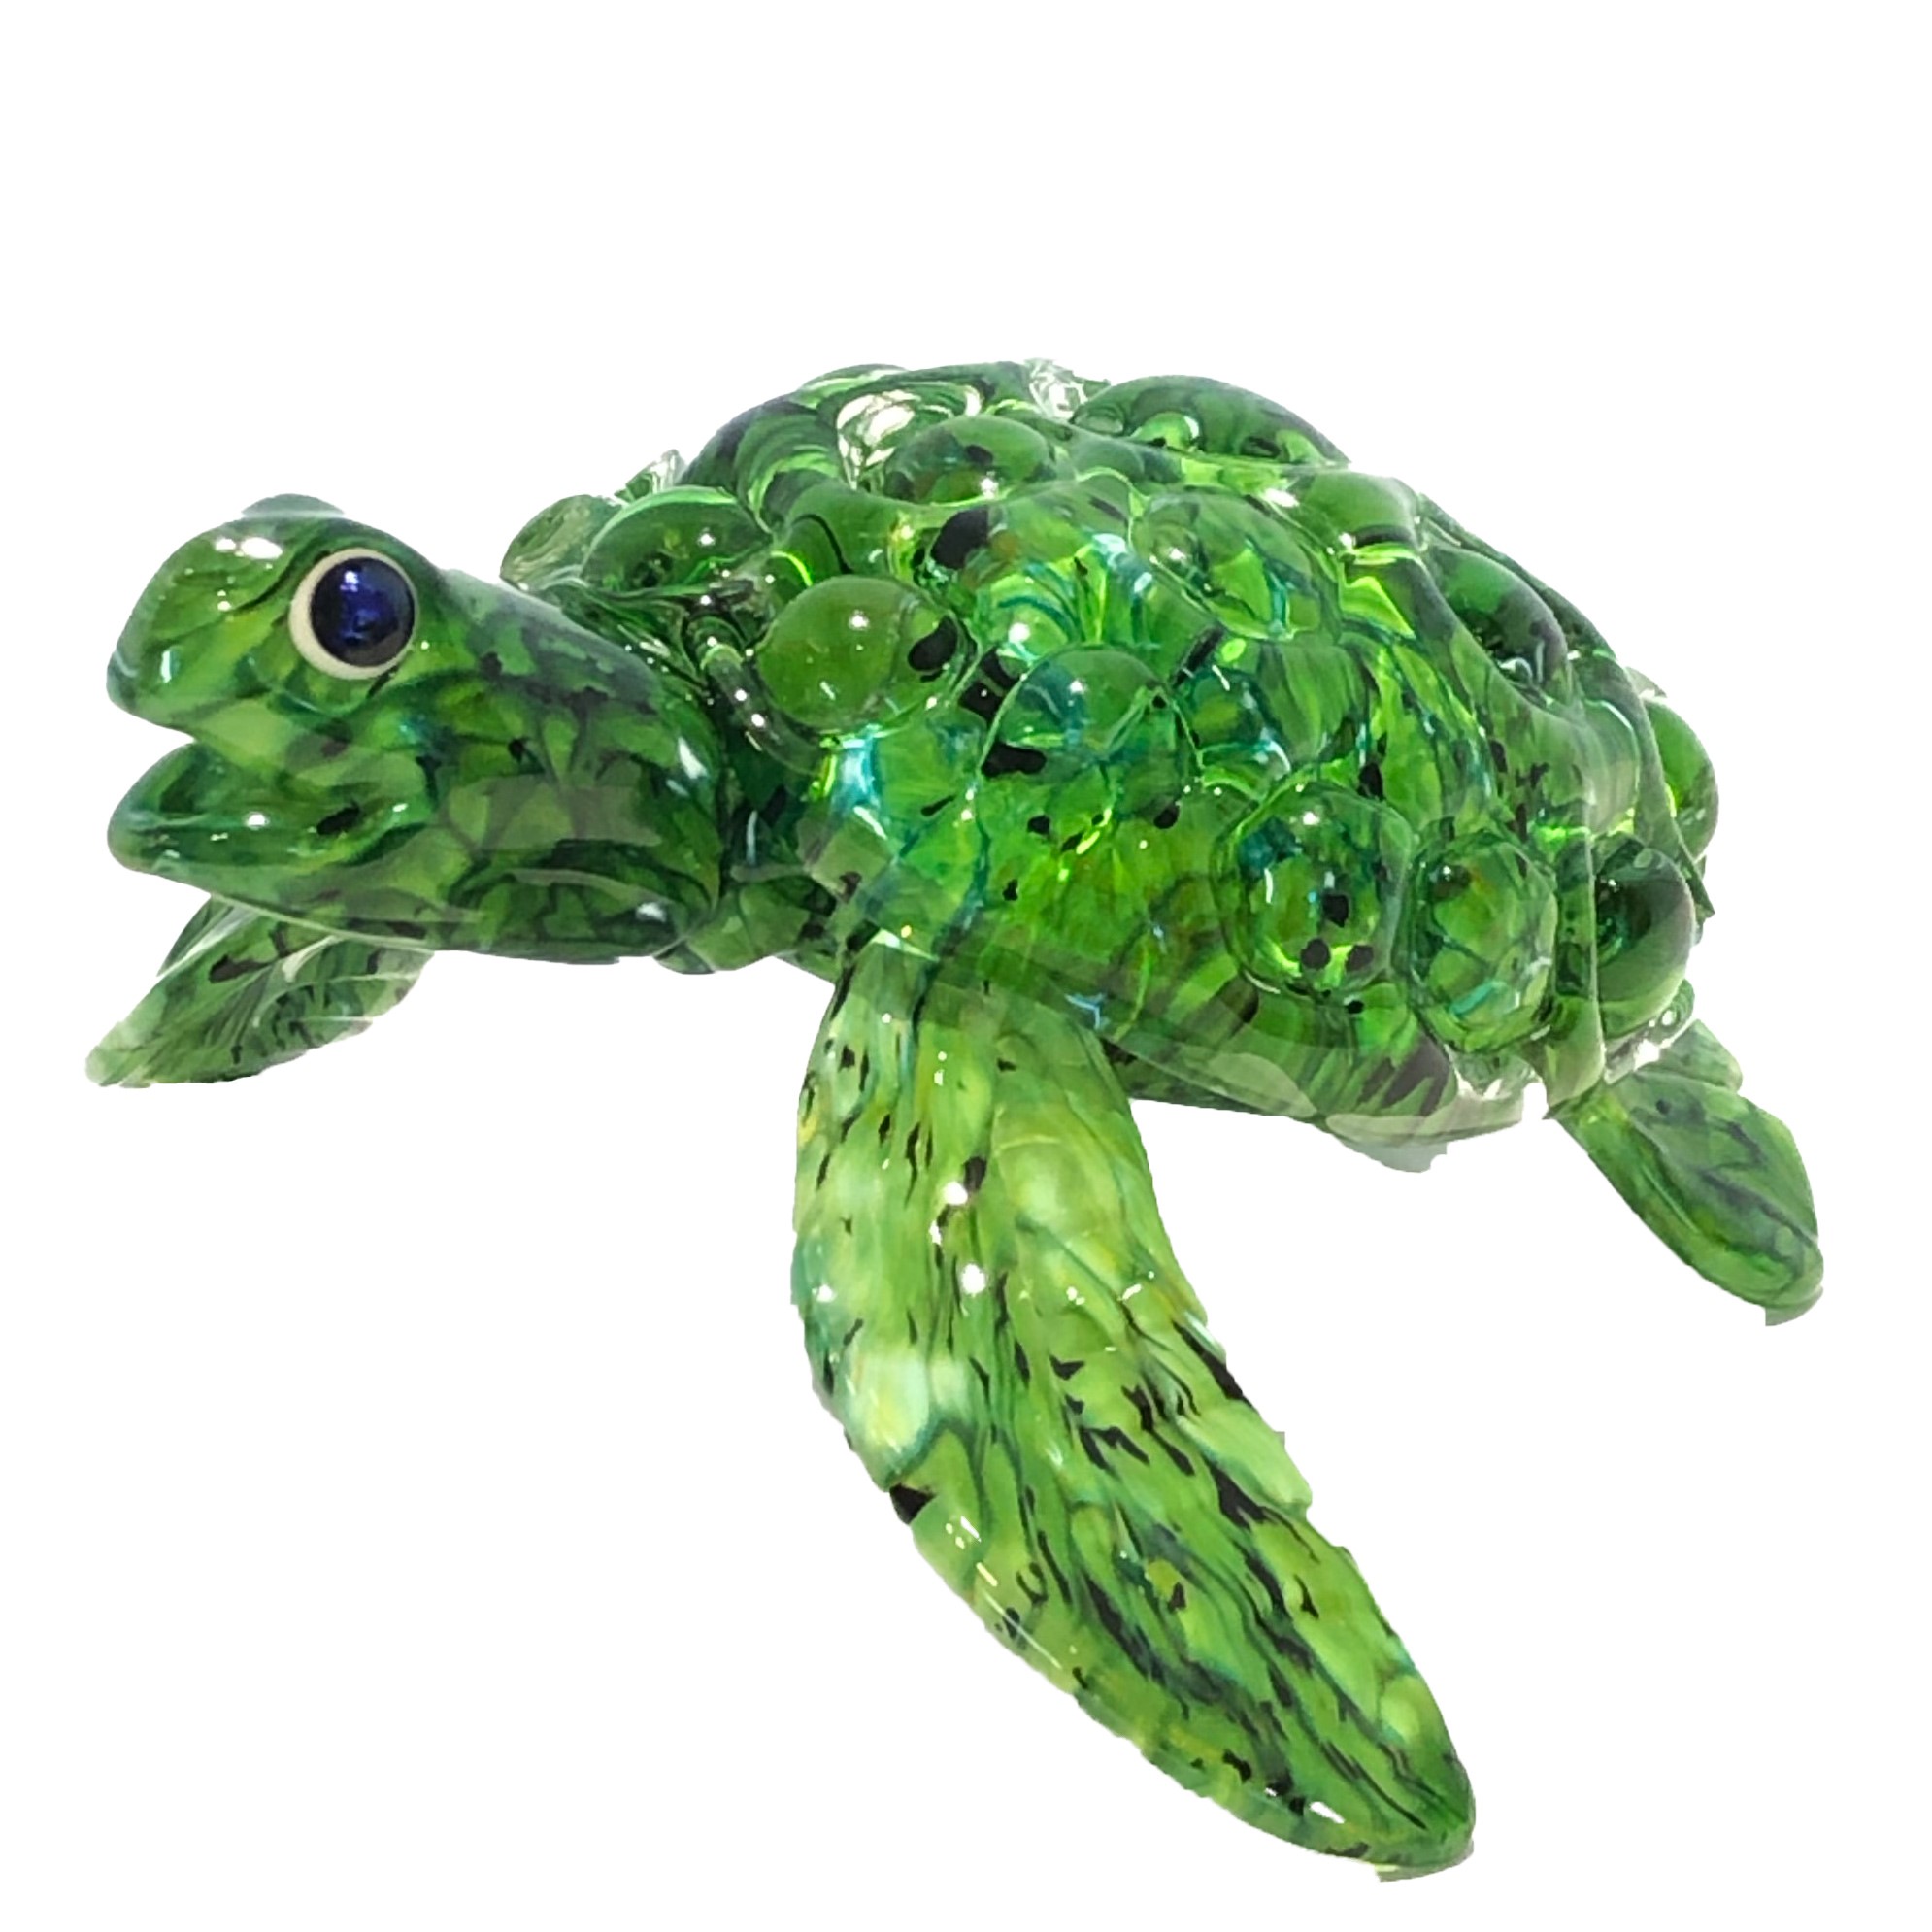 Handblown glass sea turtle